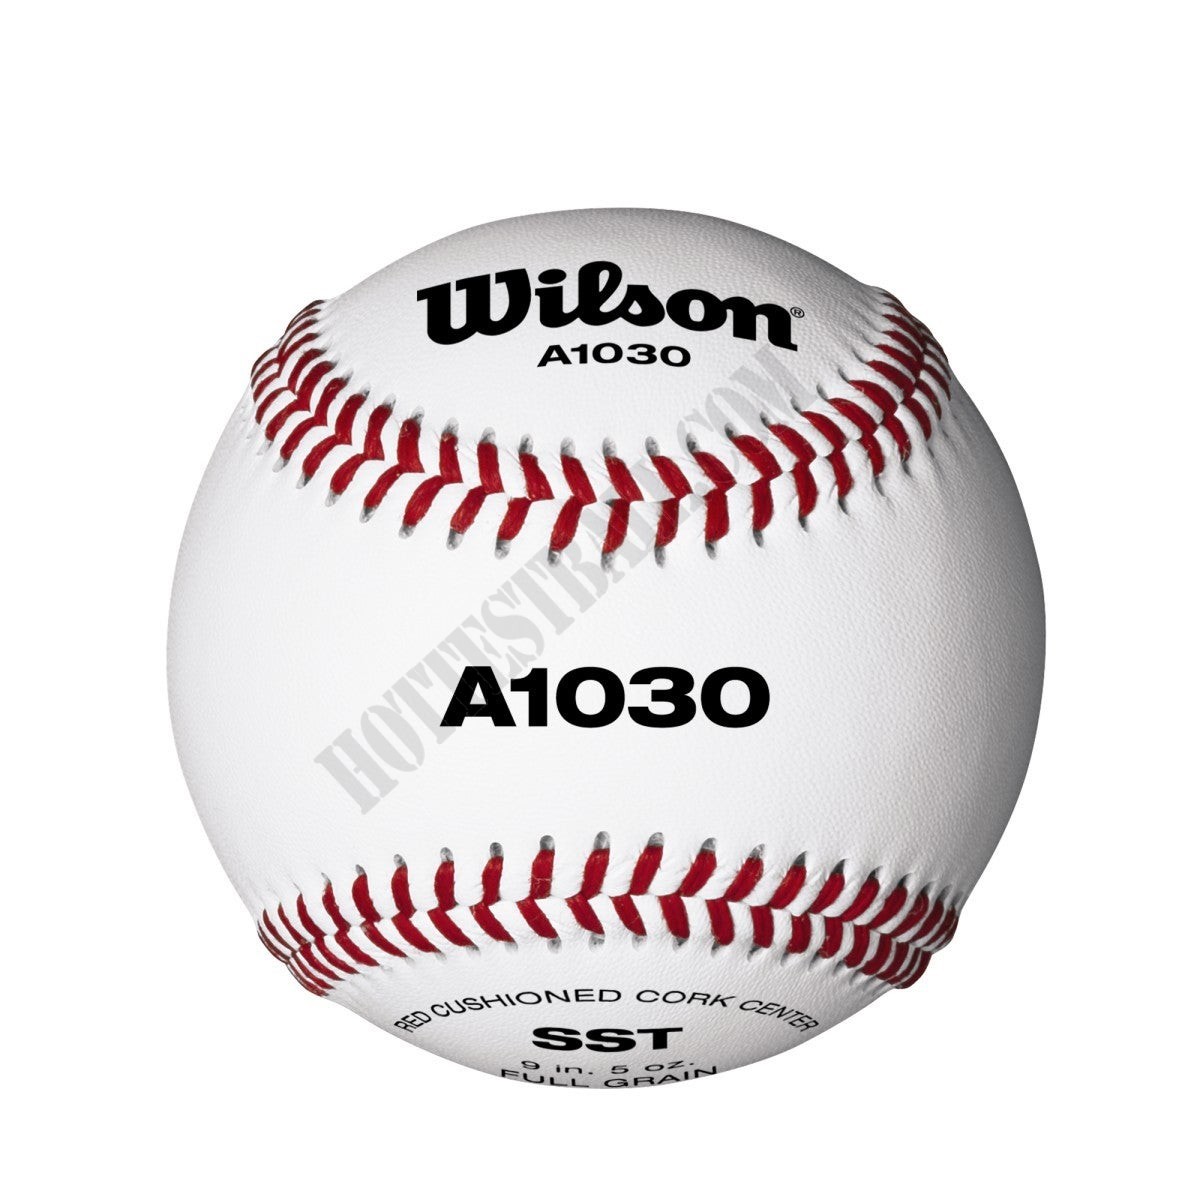 A1030 Champion Series SST Baseballs - Wilson Discount Store - A1030 Champion Series SST Baseballs - Wilson Discount Store